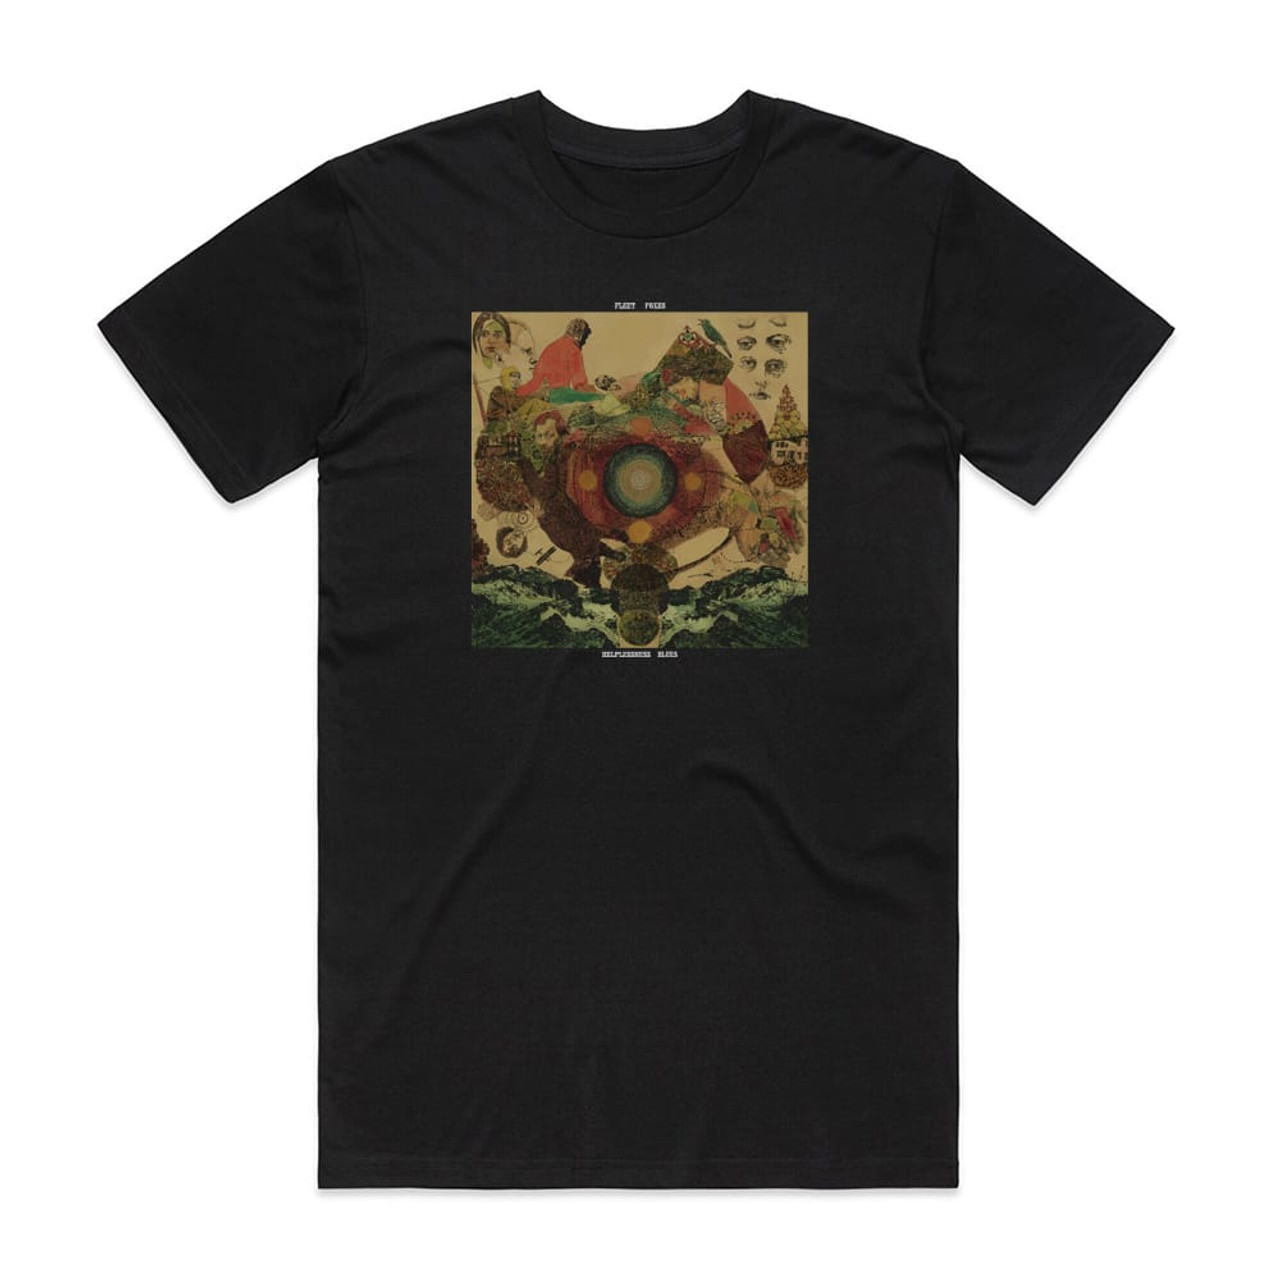 Fleet Foxes Helplessness Blues Album Cover T-Shirt Black